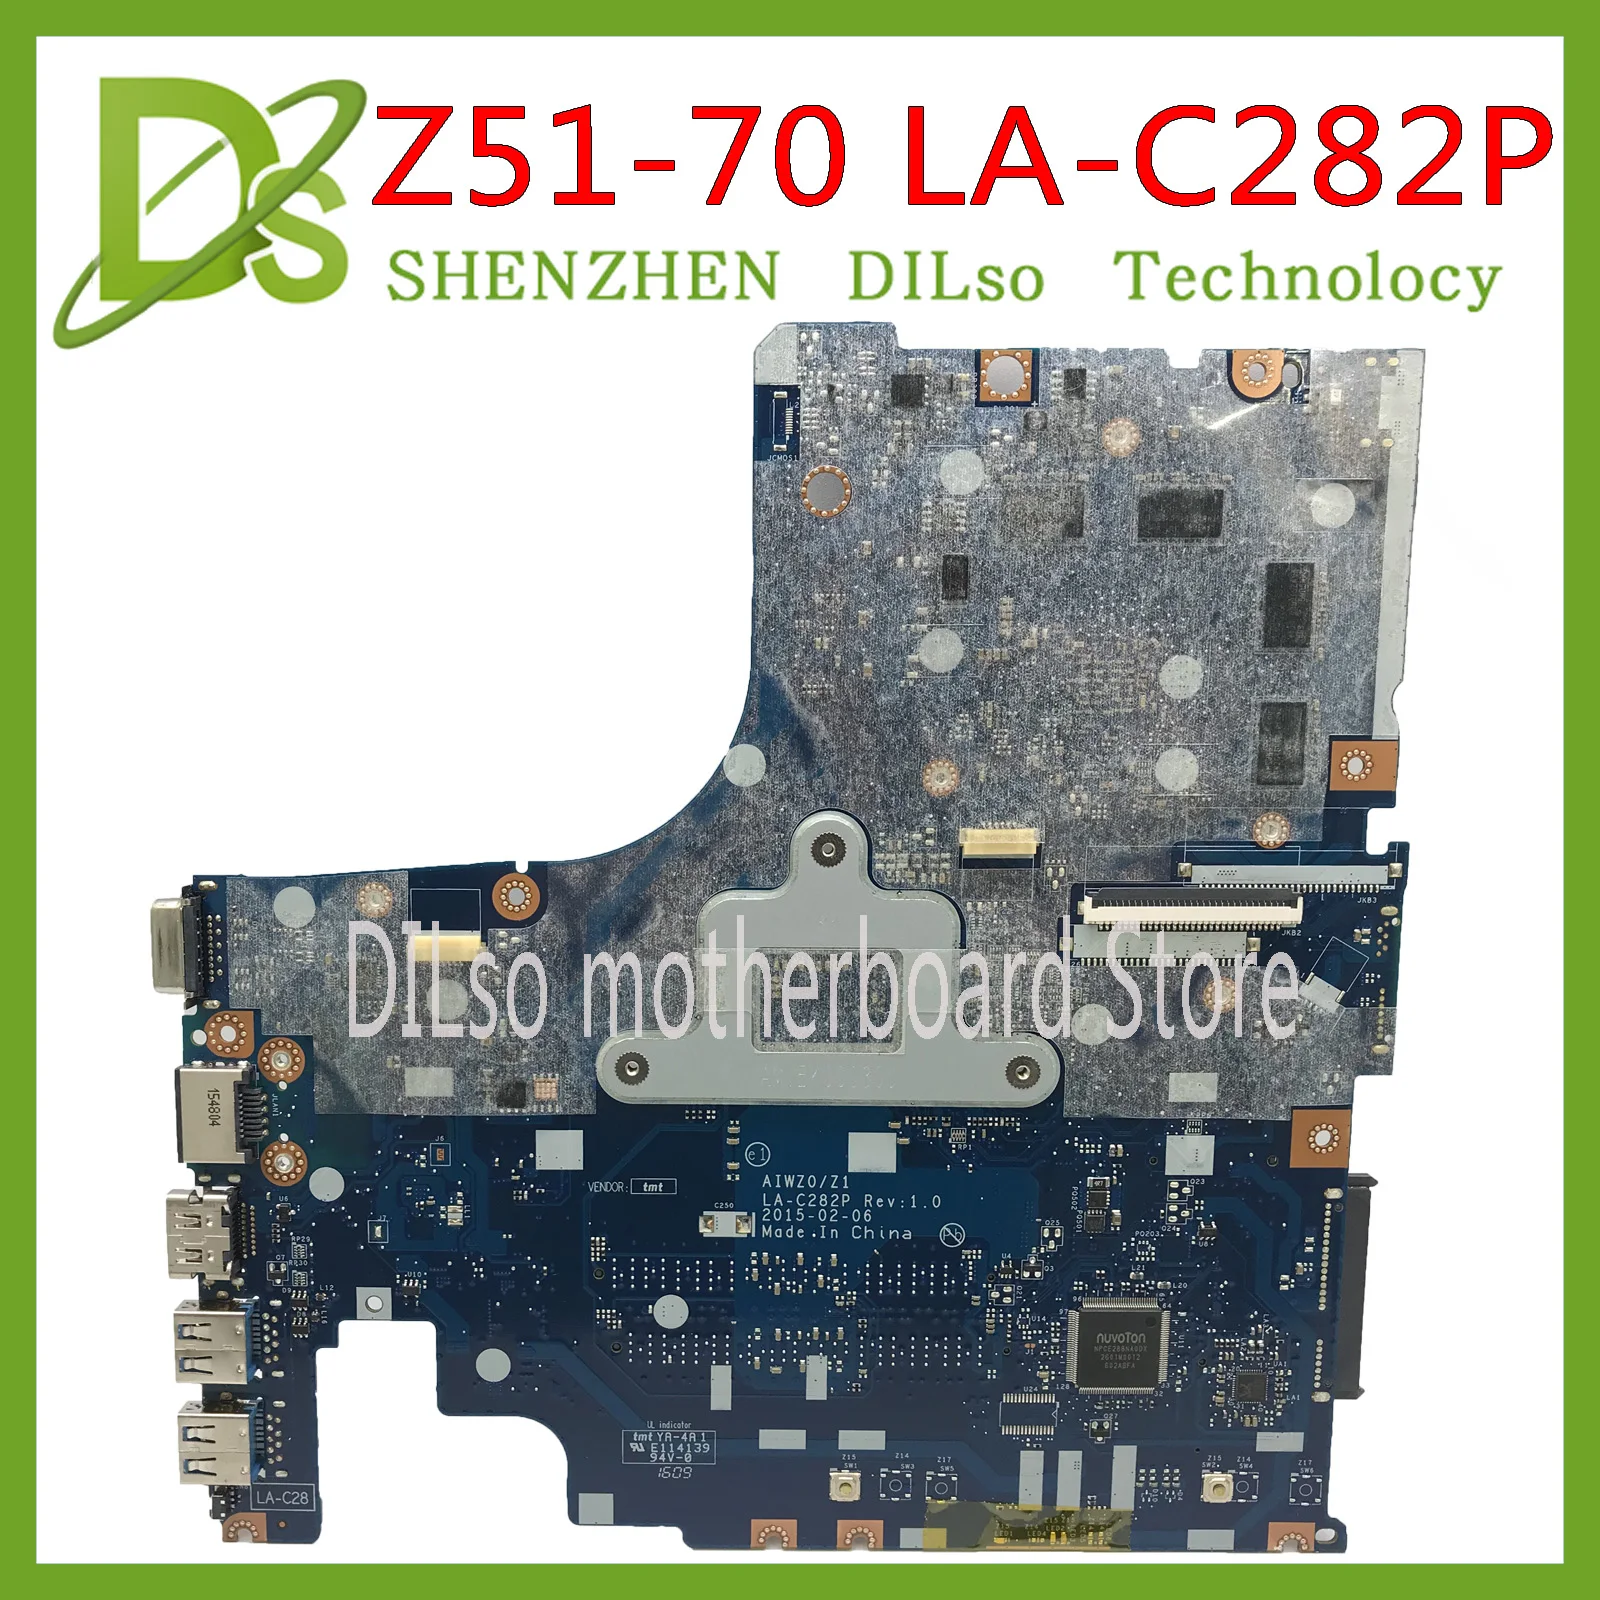 80% OFF  KEFU LA-C282P mainboard For Lenovo Notebook Z51-70 AIWZ0/Z1 LA-C282P laptop motherboard I5-5200U R9